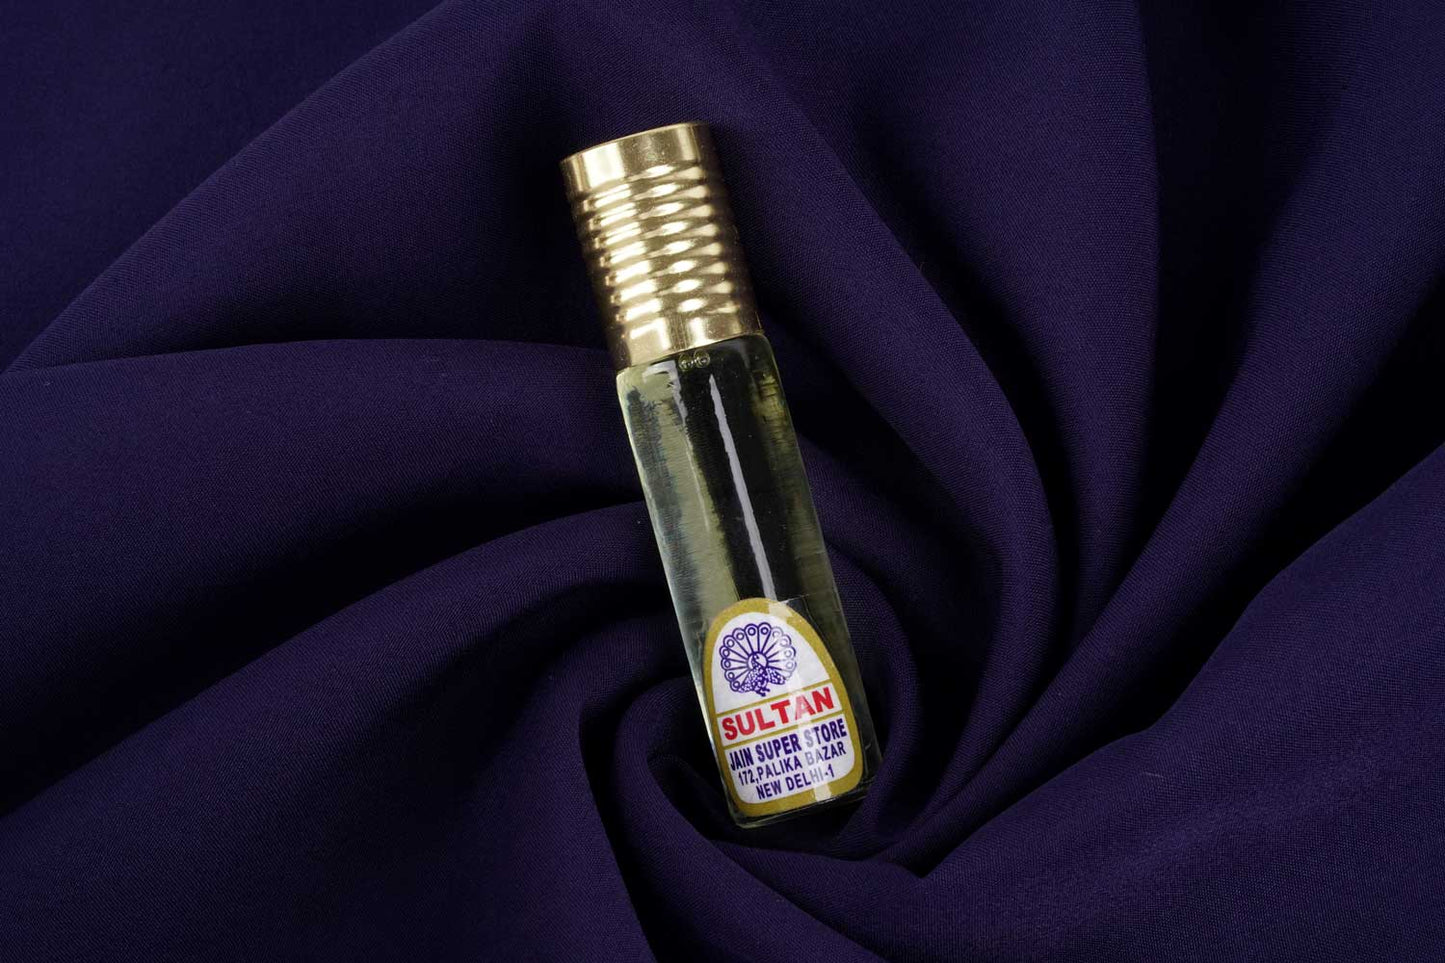 Sultan Attar Perfume